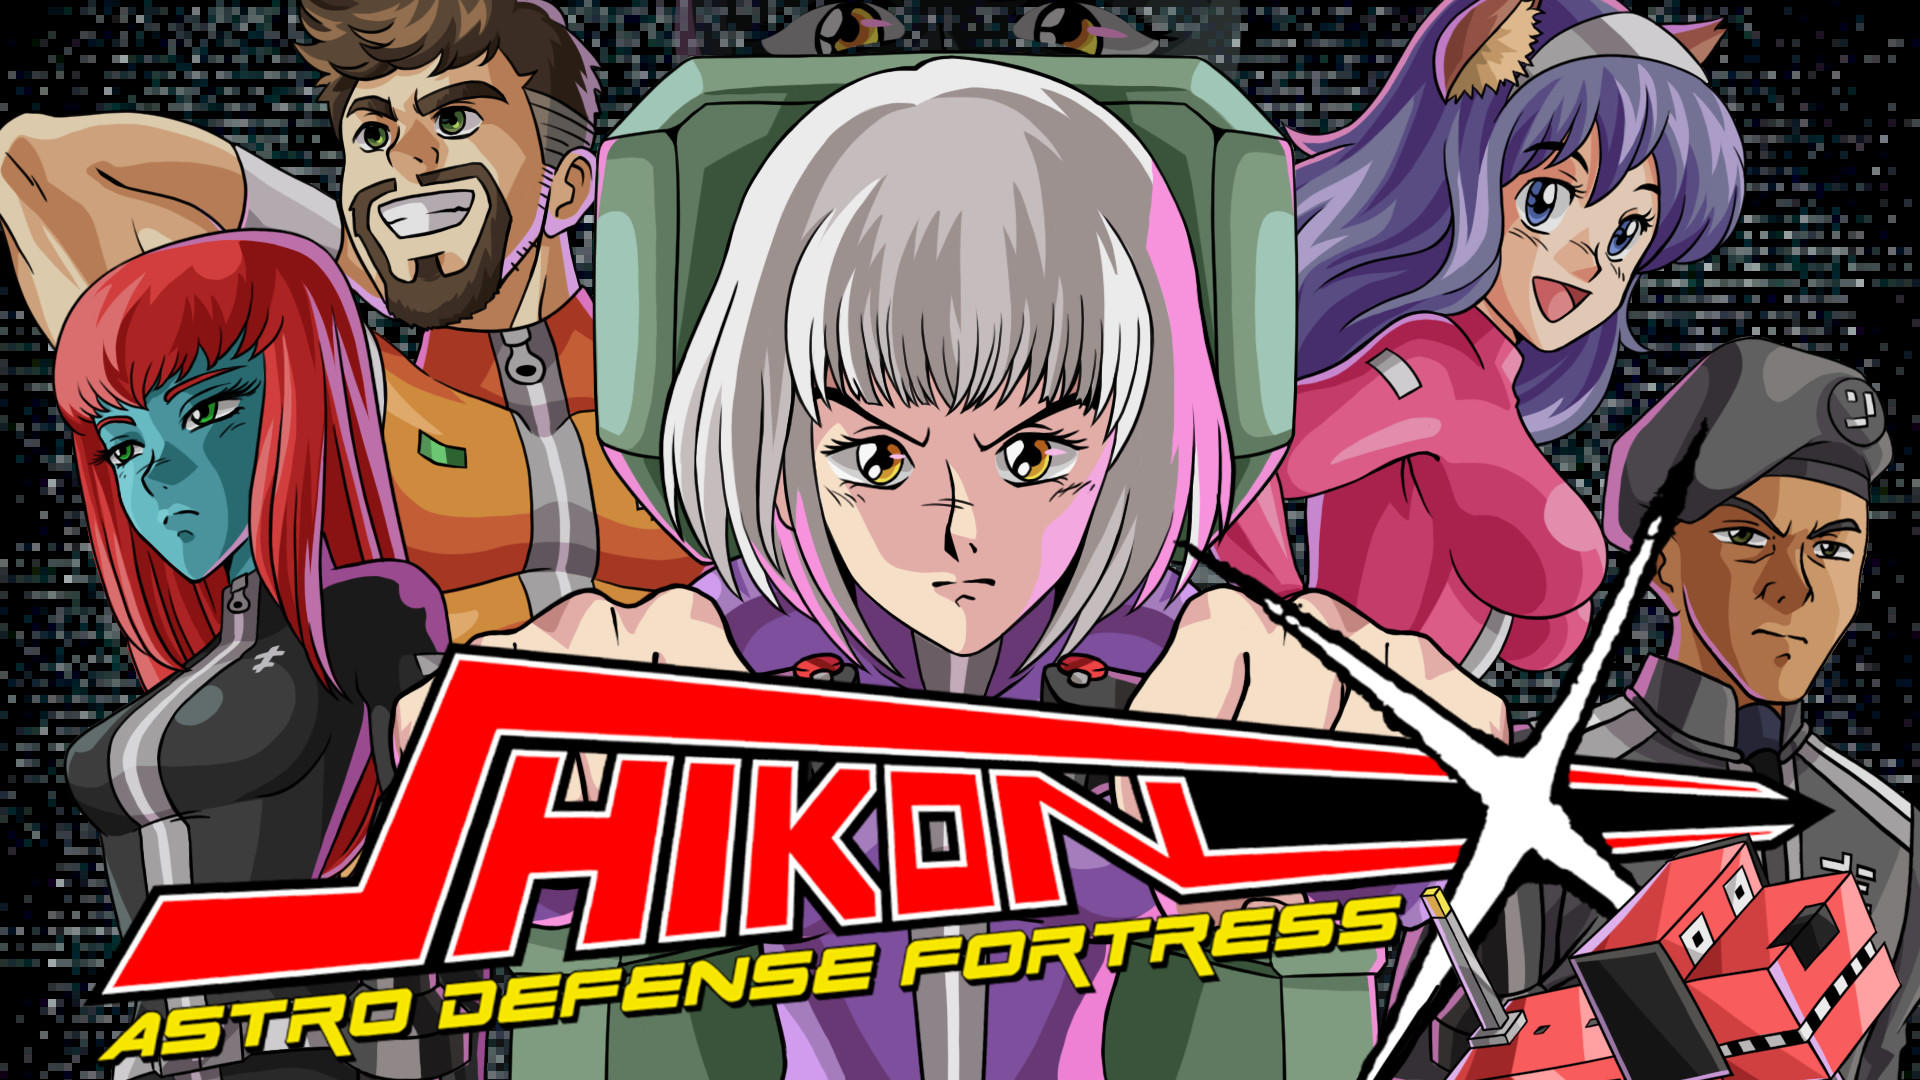 Screenshot of Shikon-X Astro Defense Fortress